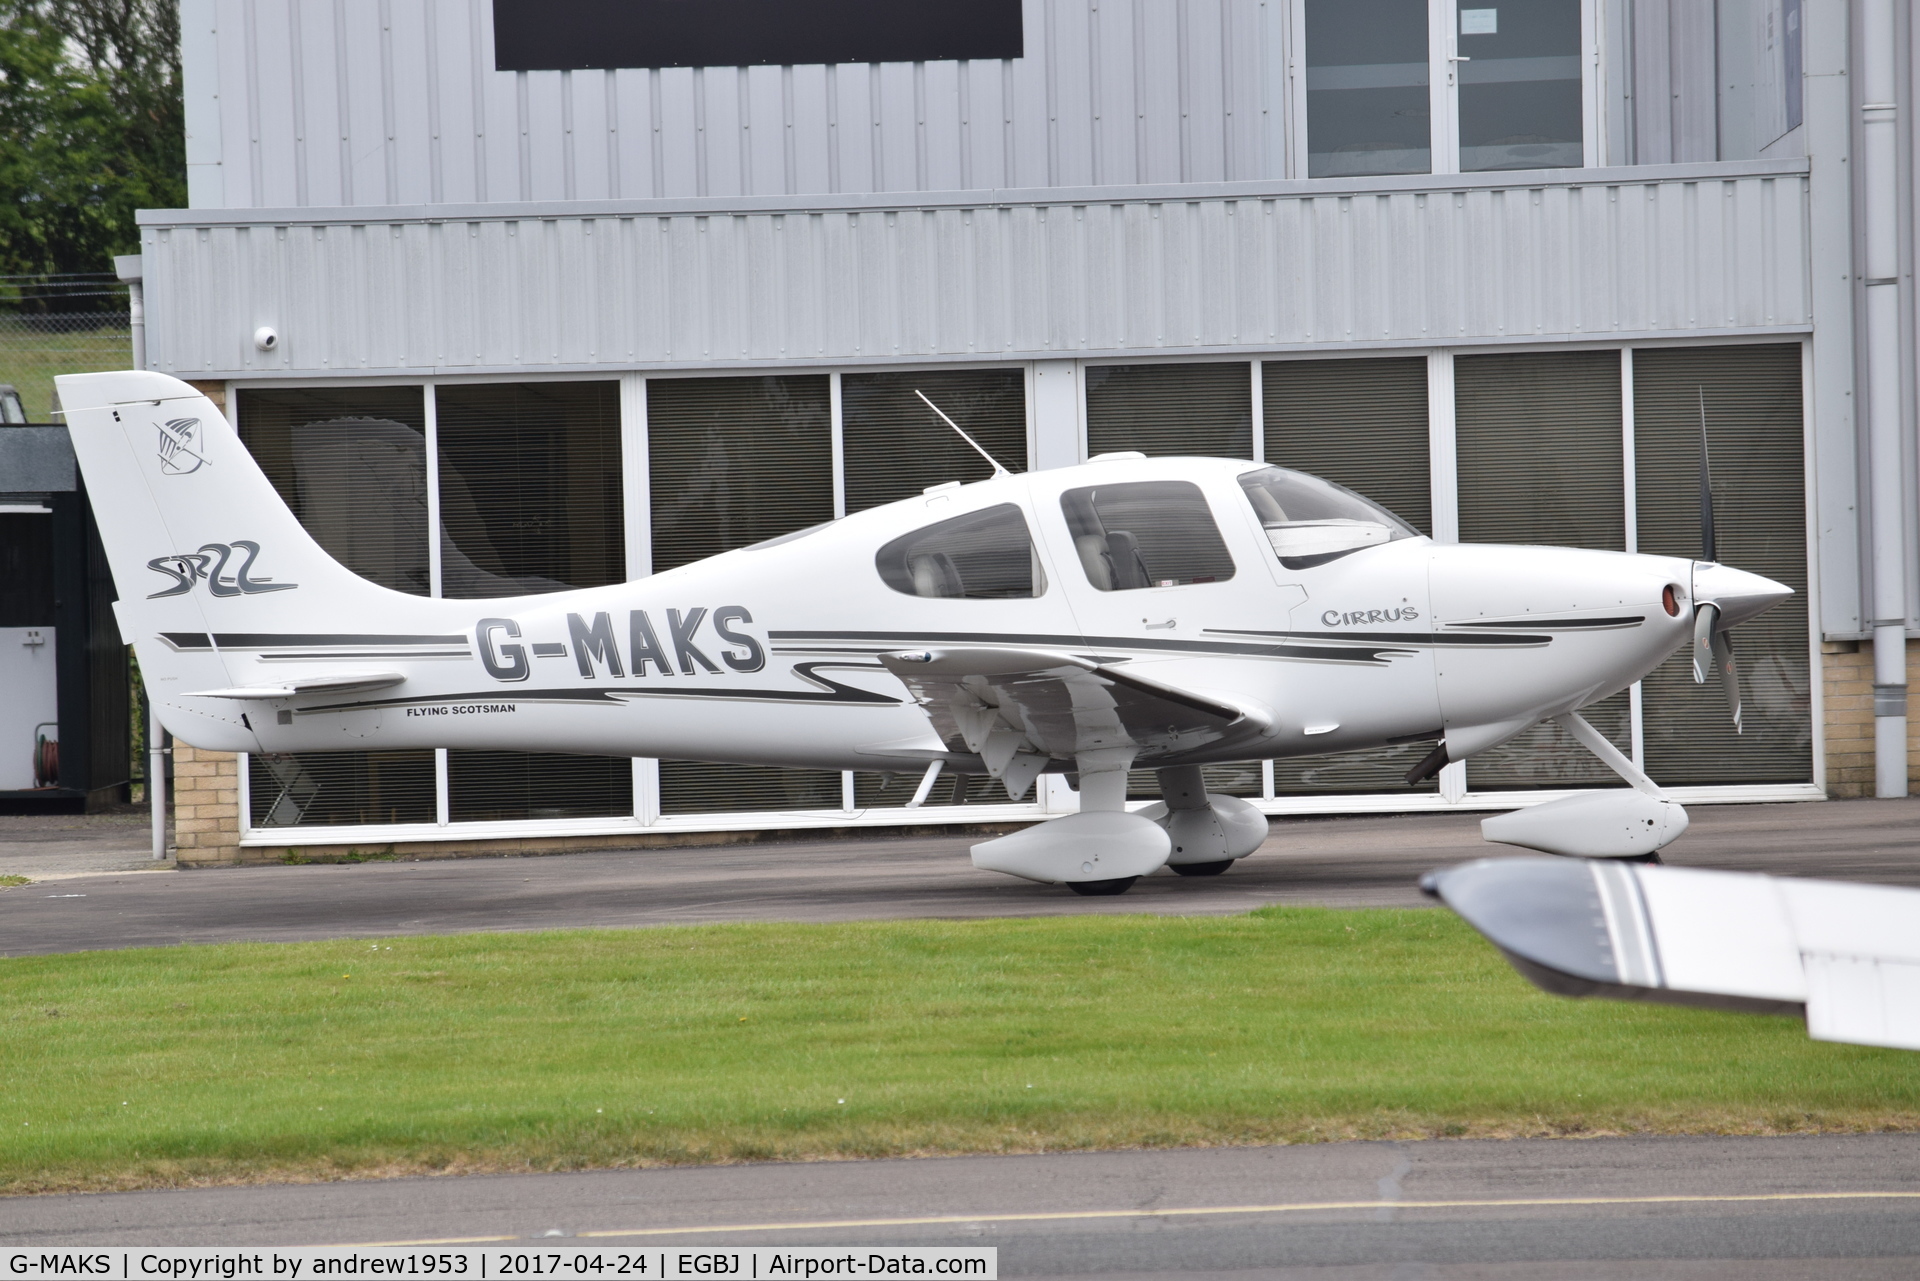 G-MAKS, 2002 Cirrus SR22 C/N 0367, G-MAKS at Gloucestershire Airport.